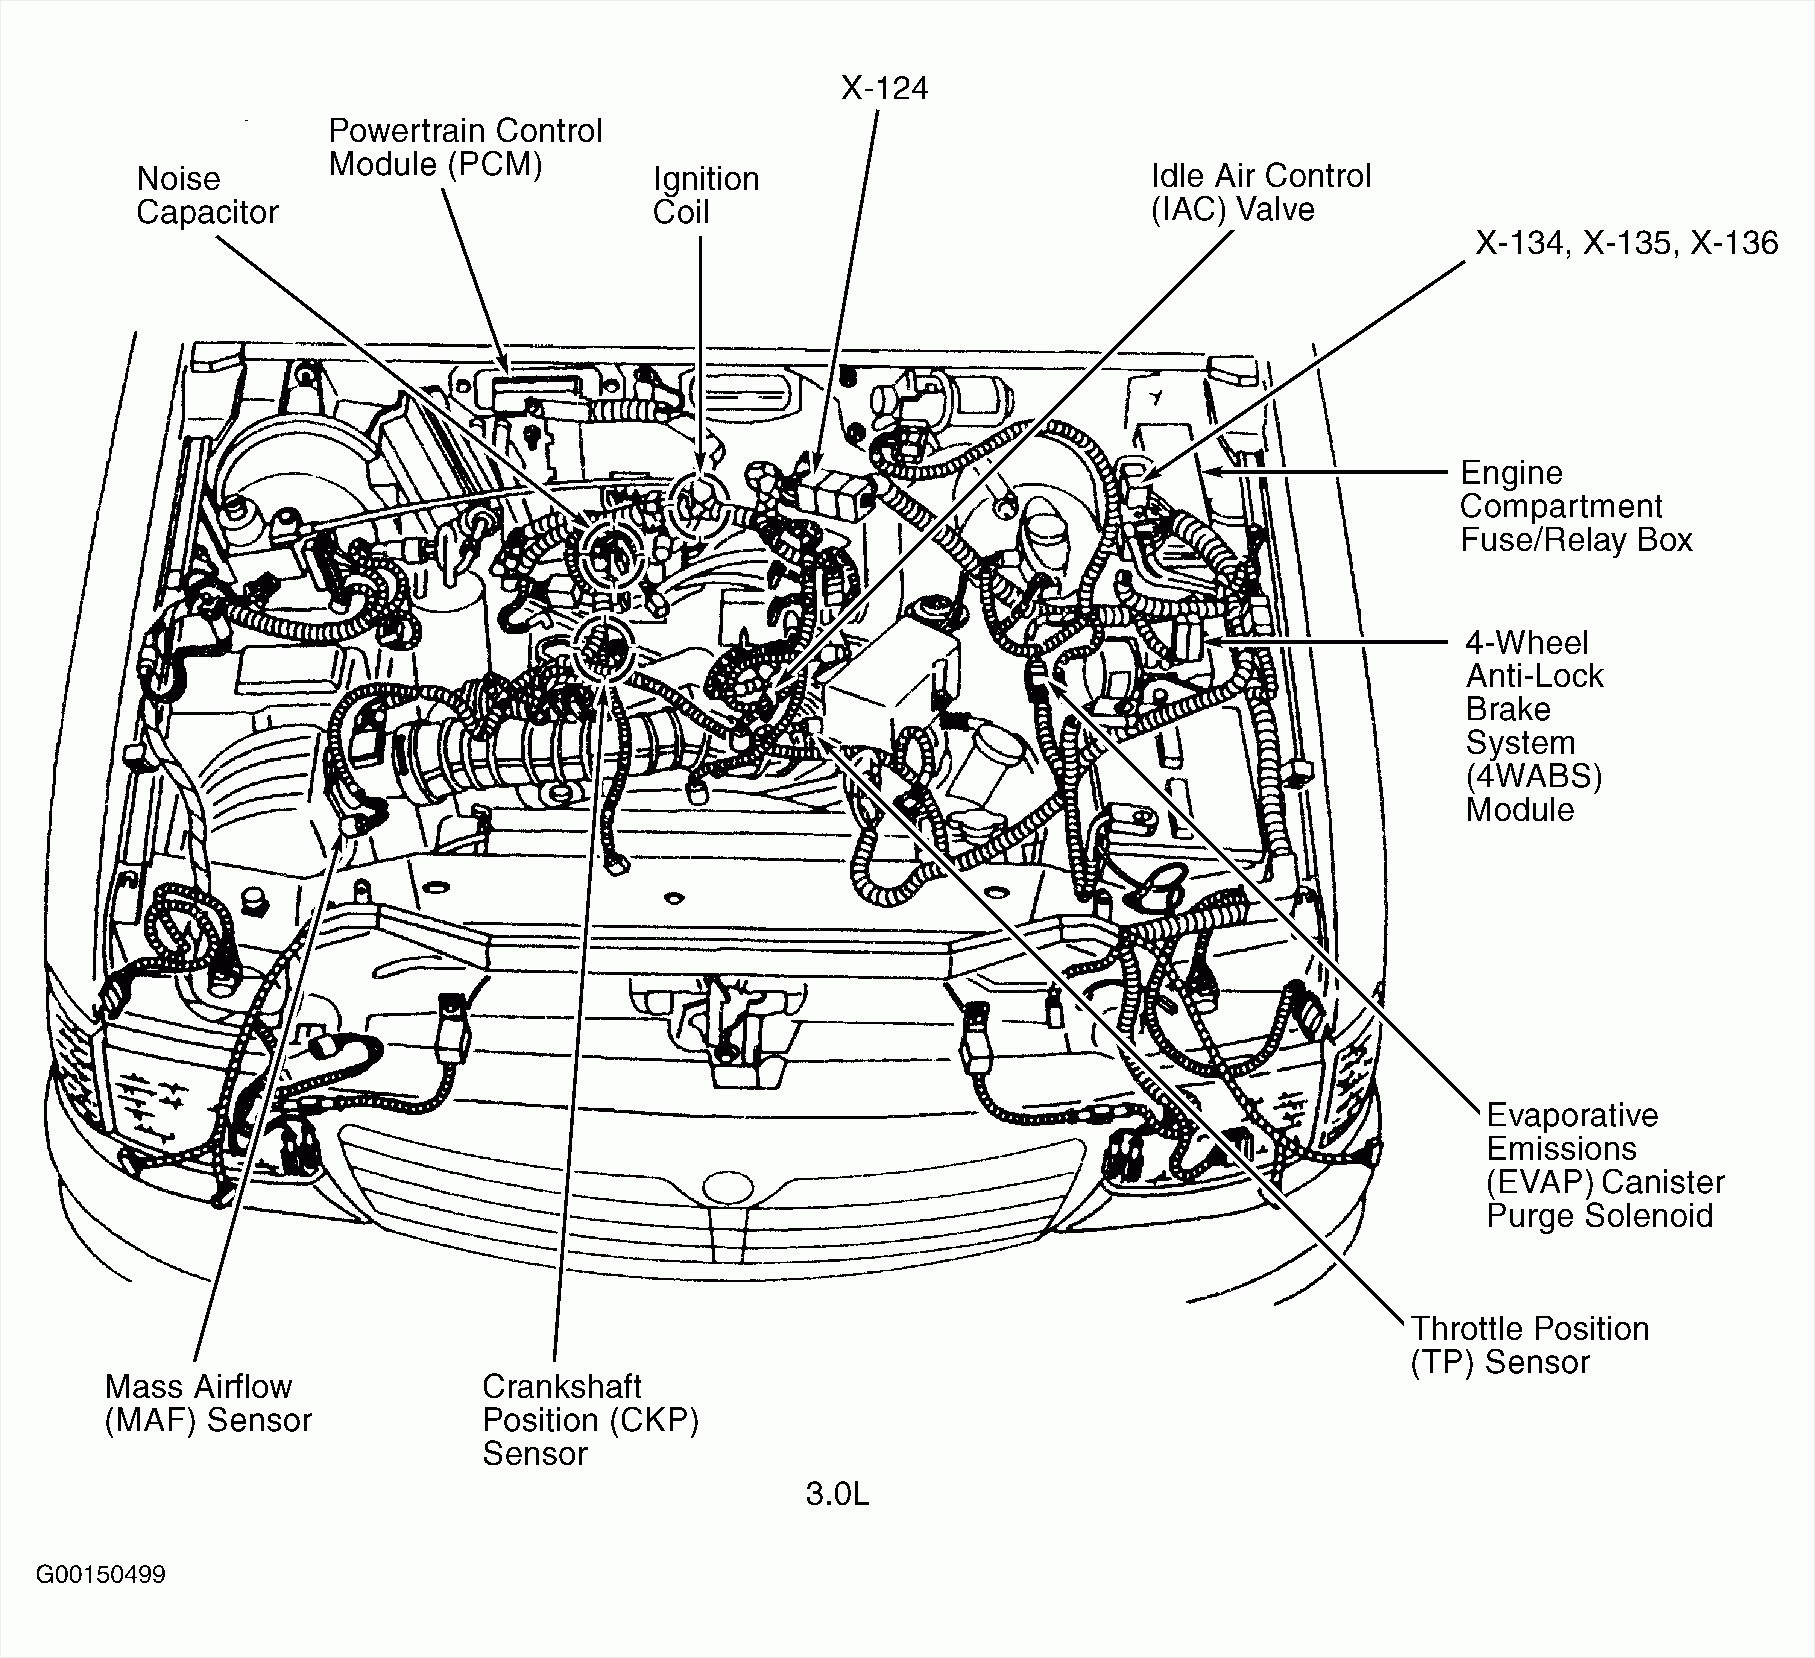 Vw Beetle Engine Diagram 1974 Vw Engine Diagram Wiring Diagram Paper Of Vw Beetle Engine Diagram